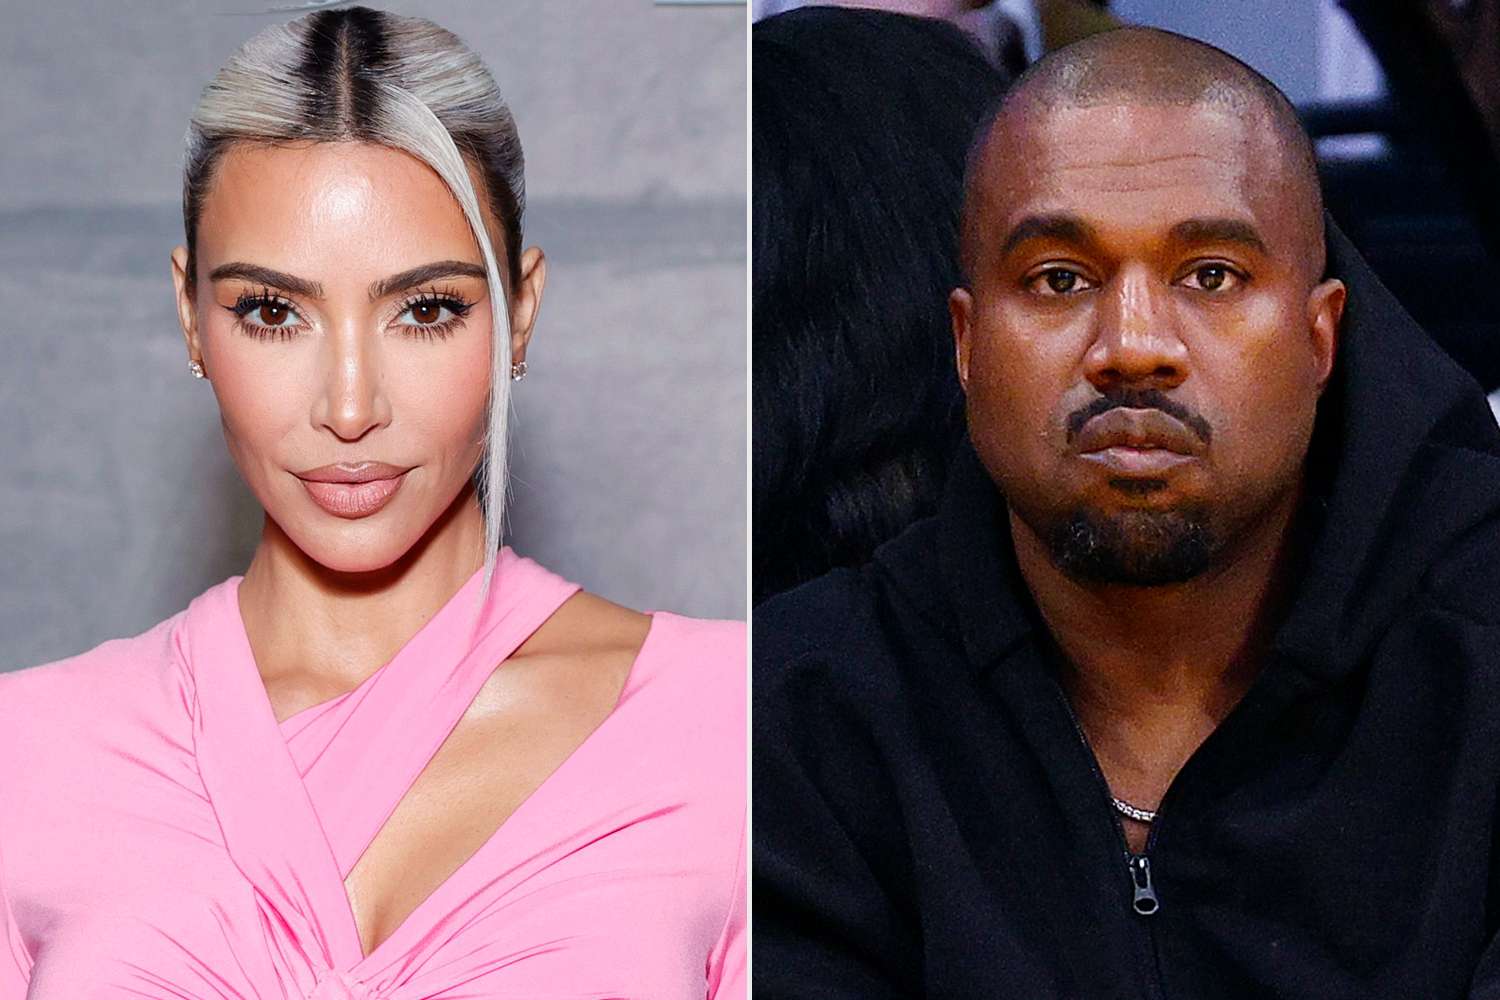 Expert Analysis On Kanye West And Kim Kardashian’s Parenting